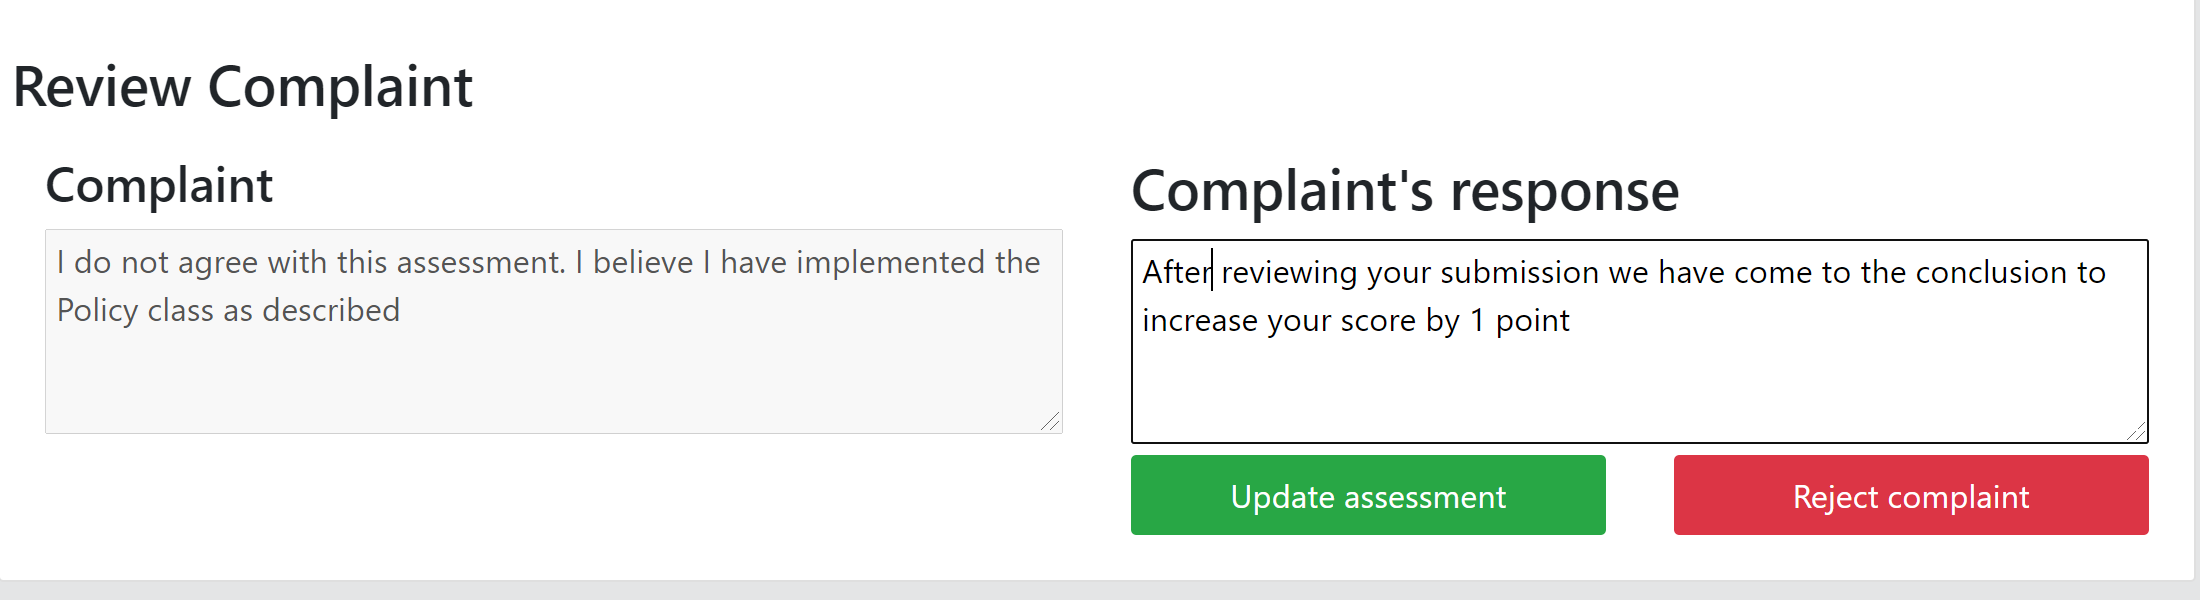 Complaint Response